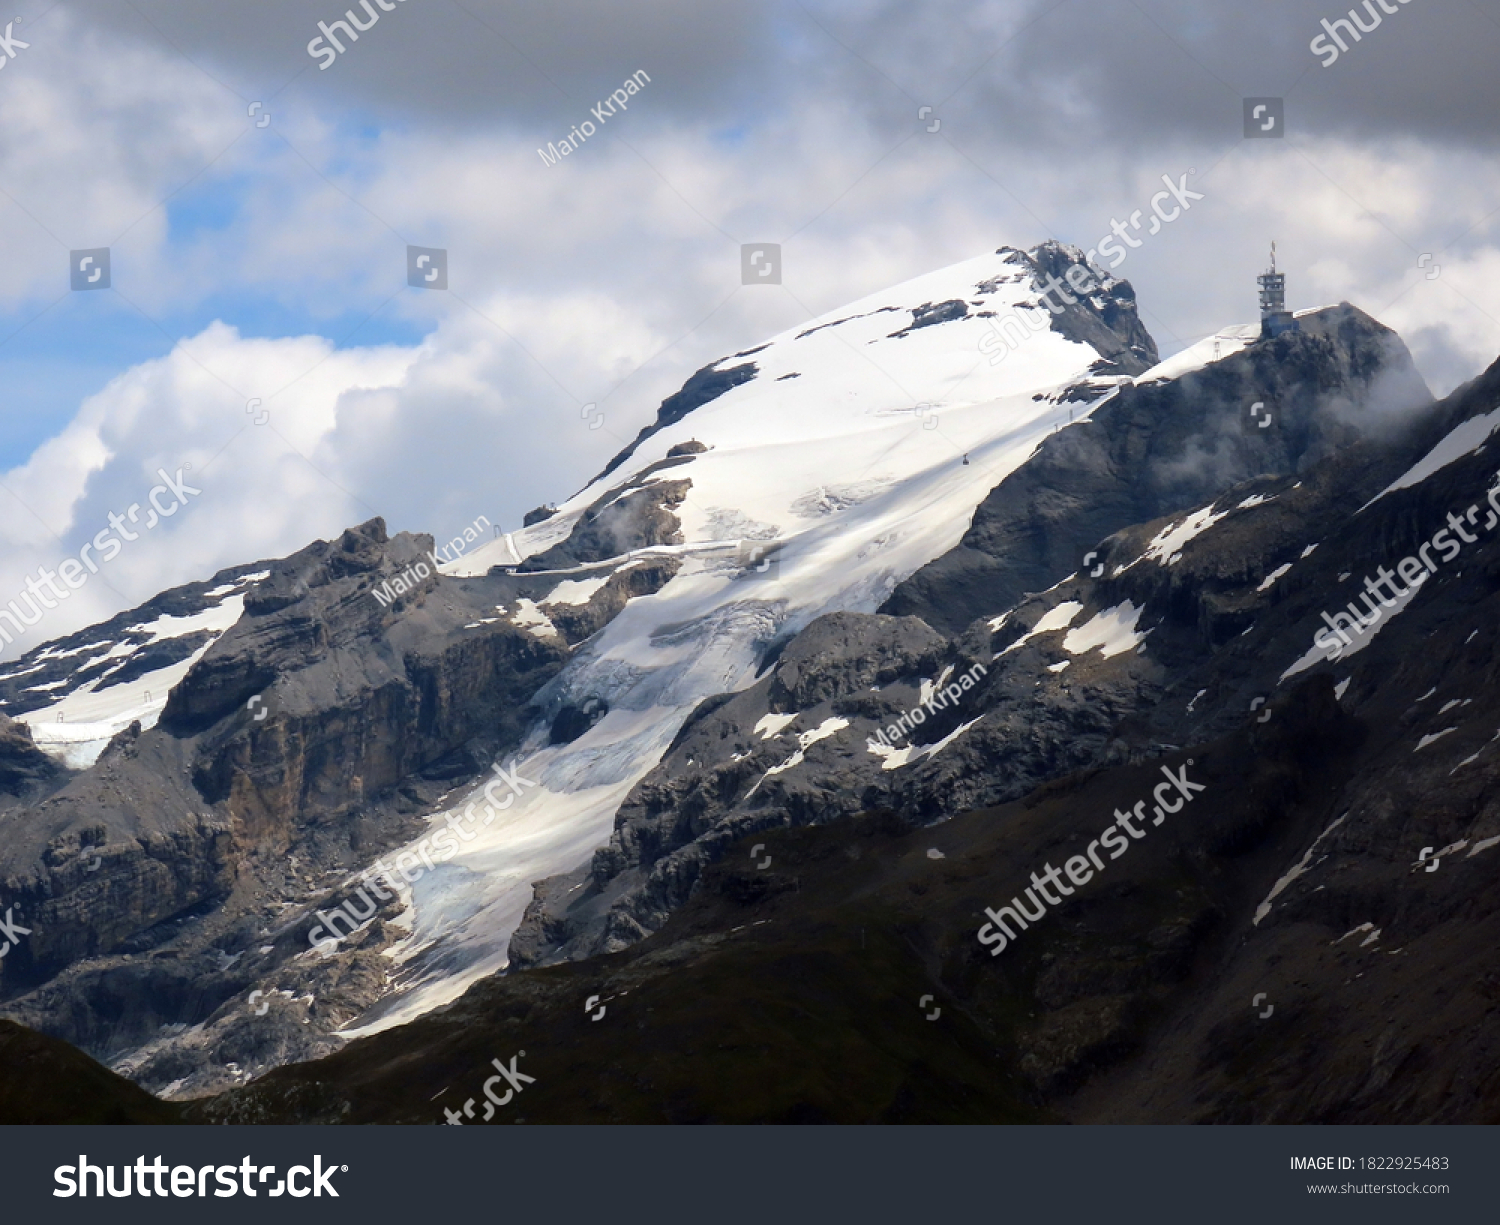 Snowy alpine peaks Titlis and Small Titlis (Klein Titlis) with the eponymous glacier (Titlis-Gletscher) over the Engelbergertal valley Engelberg - Canton of Obwalden, Switzerland (Schweiz) #1822925483